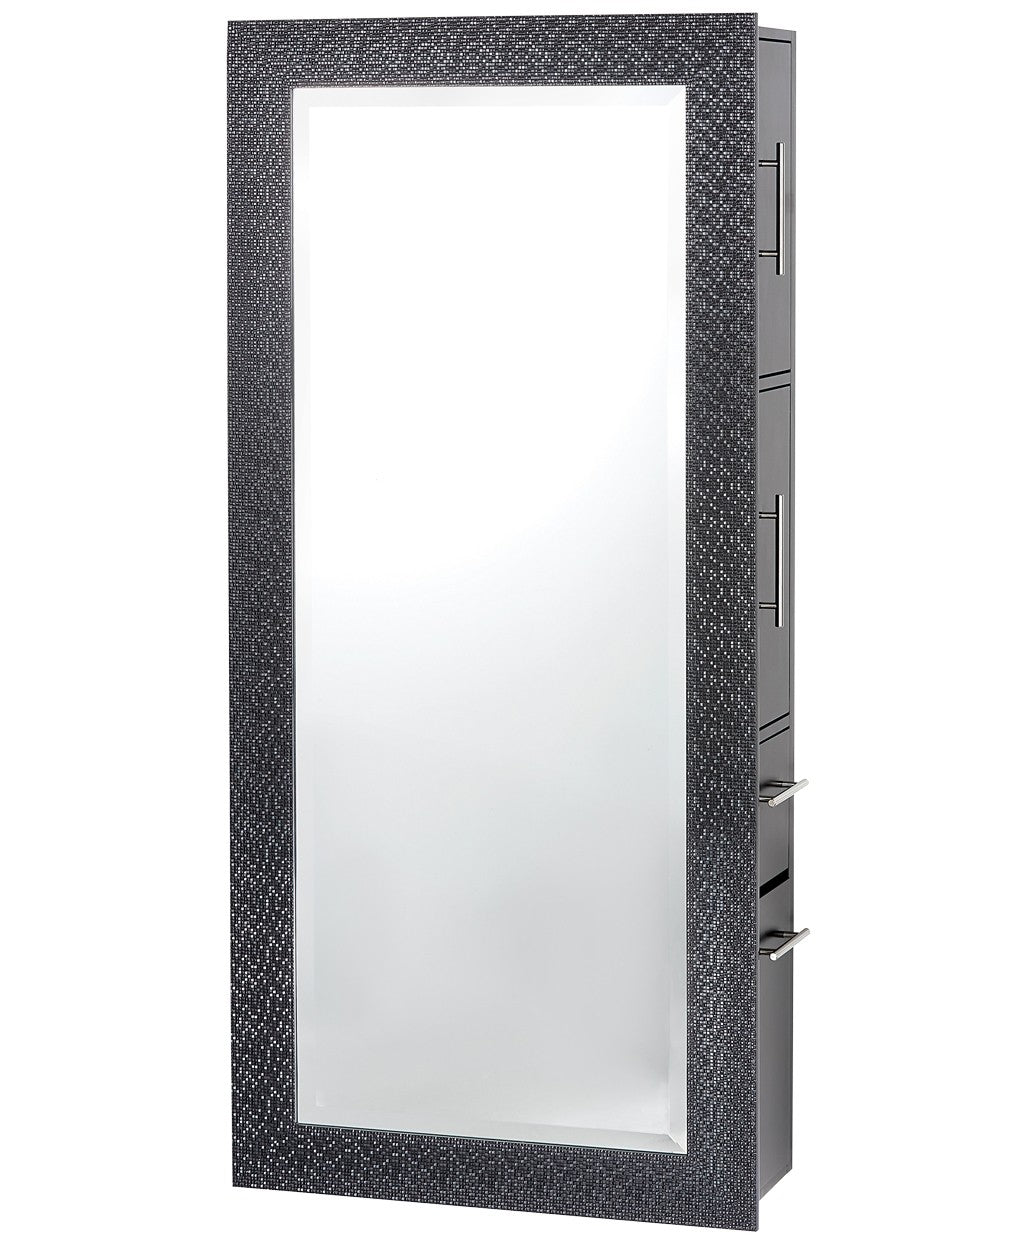 Pibbs Diamond Salon Mirror & Storage Server